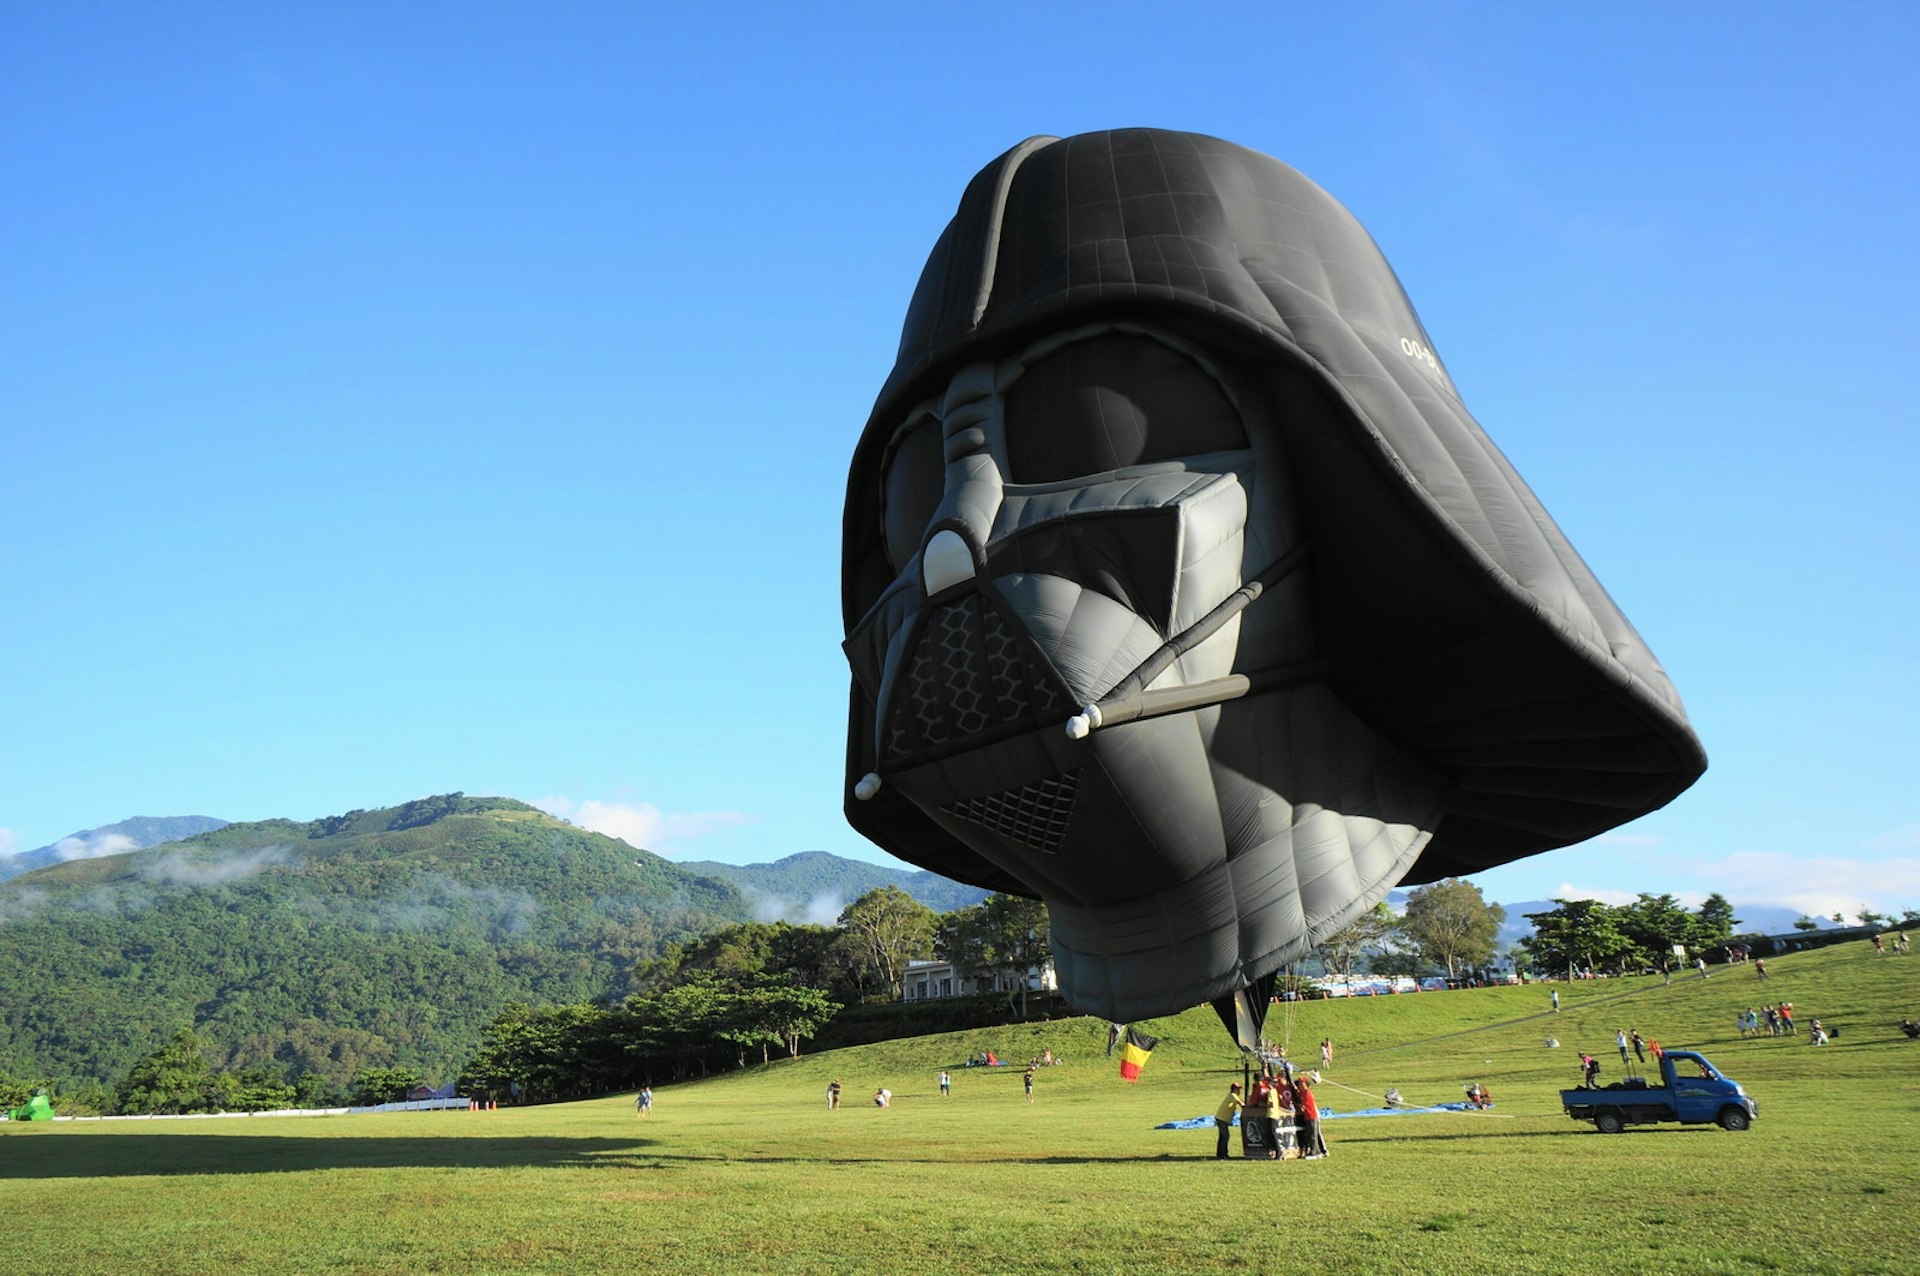 Darth Vader makes an appearance at the Taiwan International Balloon Fiesta © stepmorem / Shutterstock